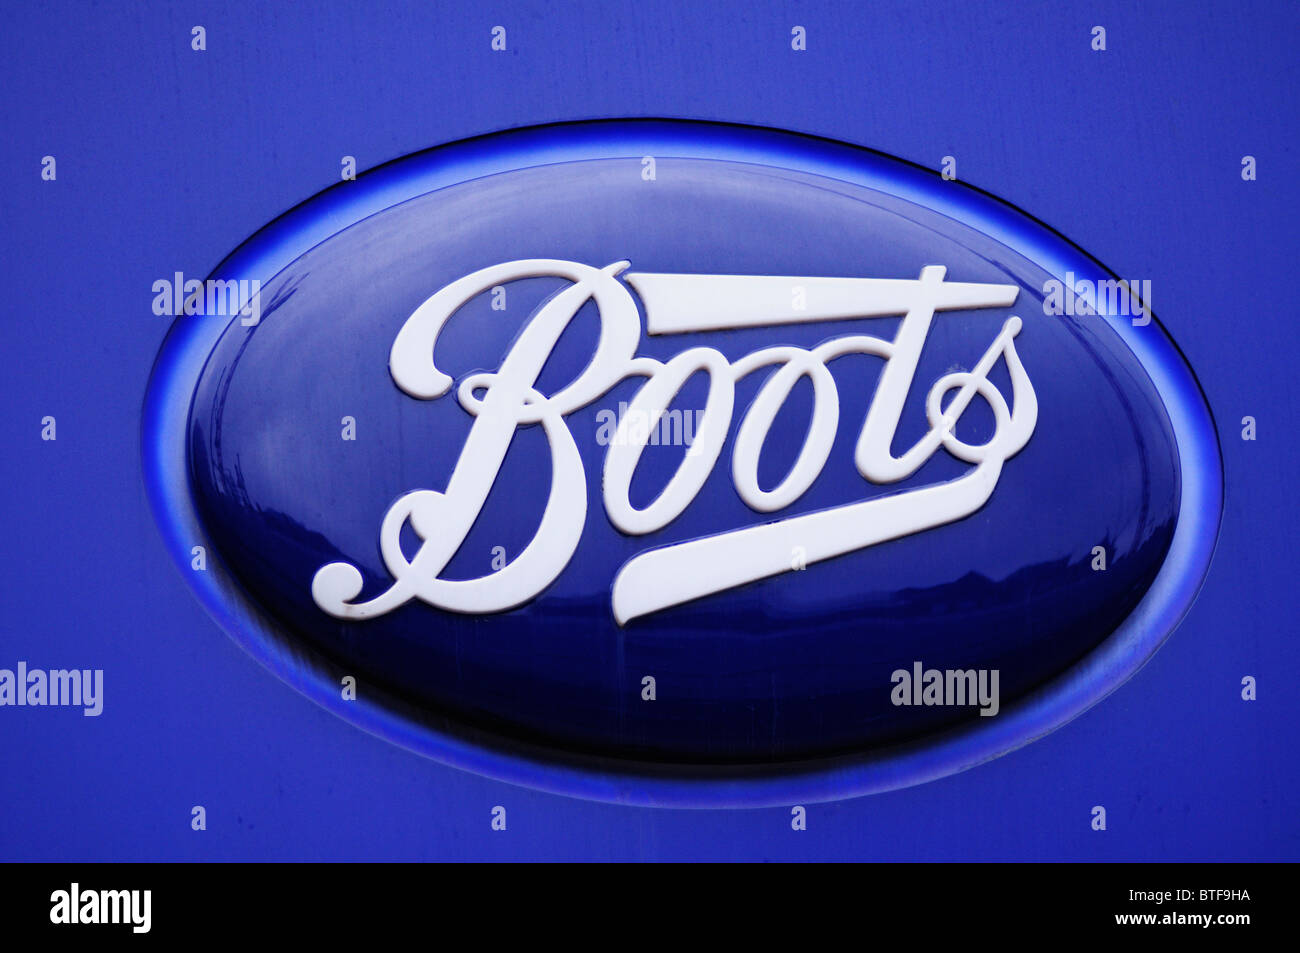 Boots Chemist shop sign logo, London, England, UK Banque D'Images